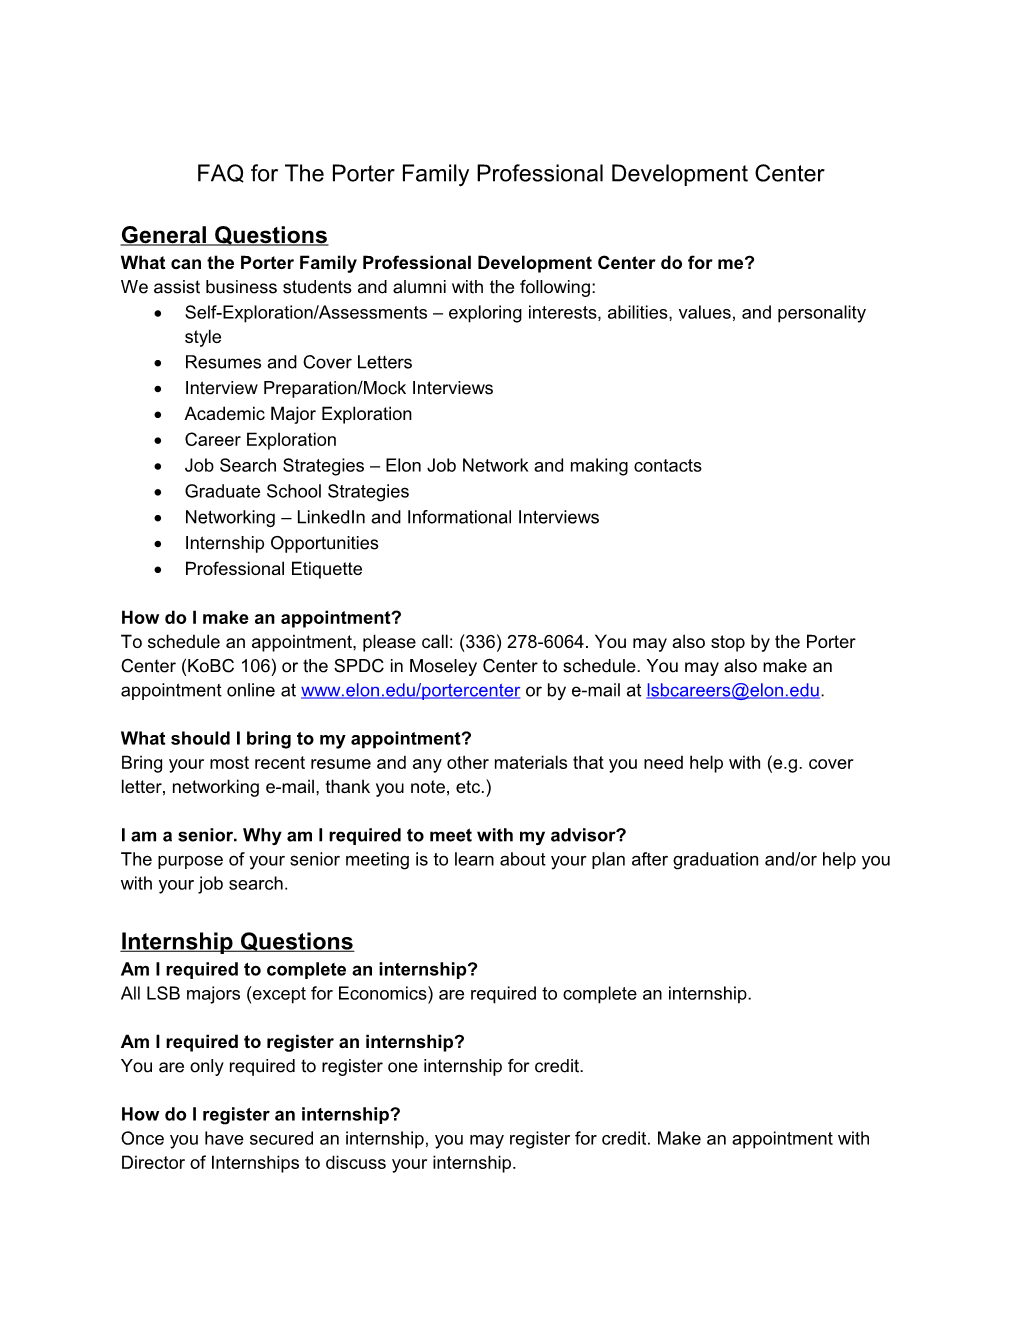 FAQ for the Porter Family Professional Development Center